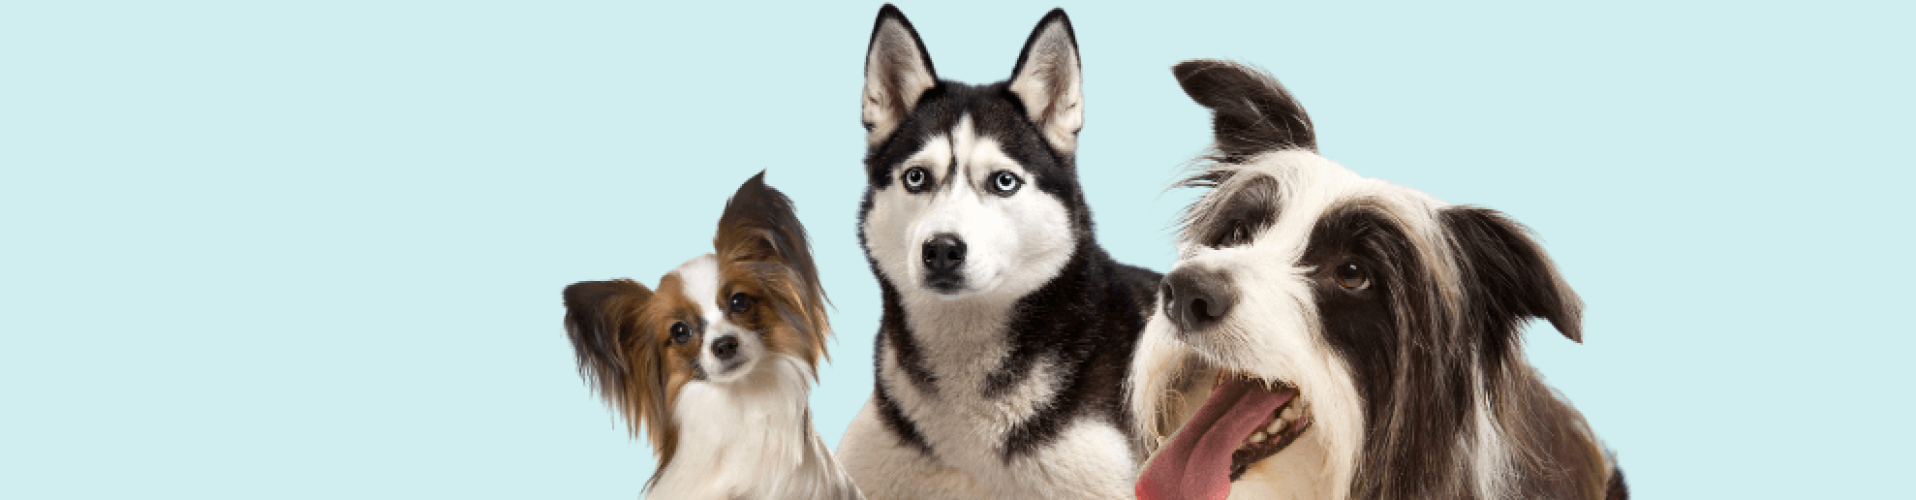 cursus gehoorzaamheid hond online